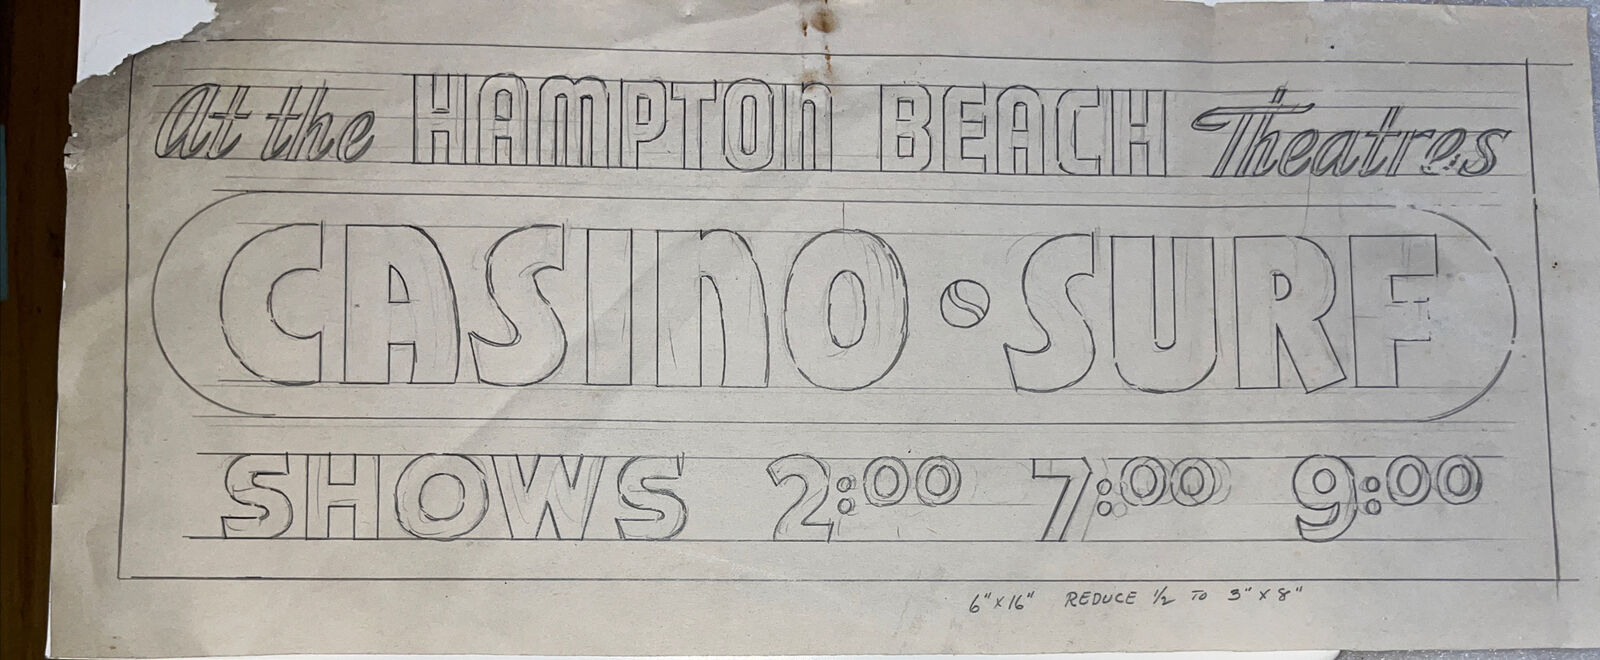 Vintage Advertising Billboard Ad Samples: Hampton Beach Theatres NH Casino Shows